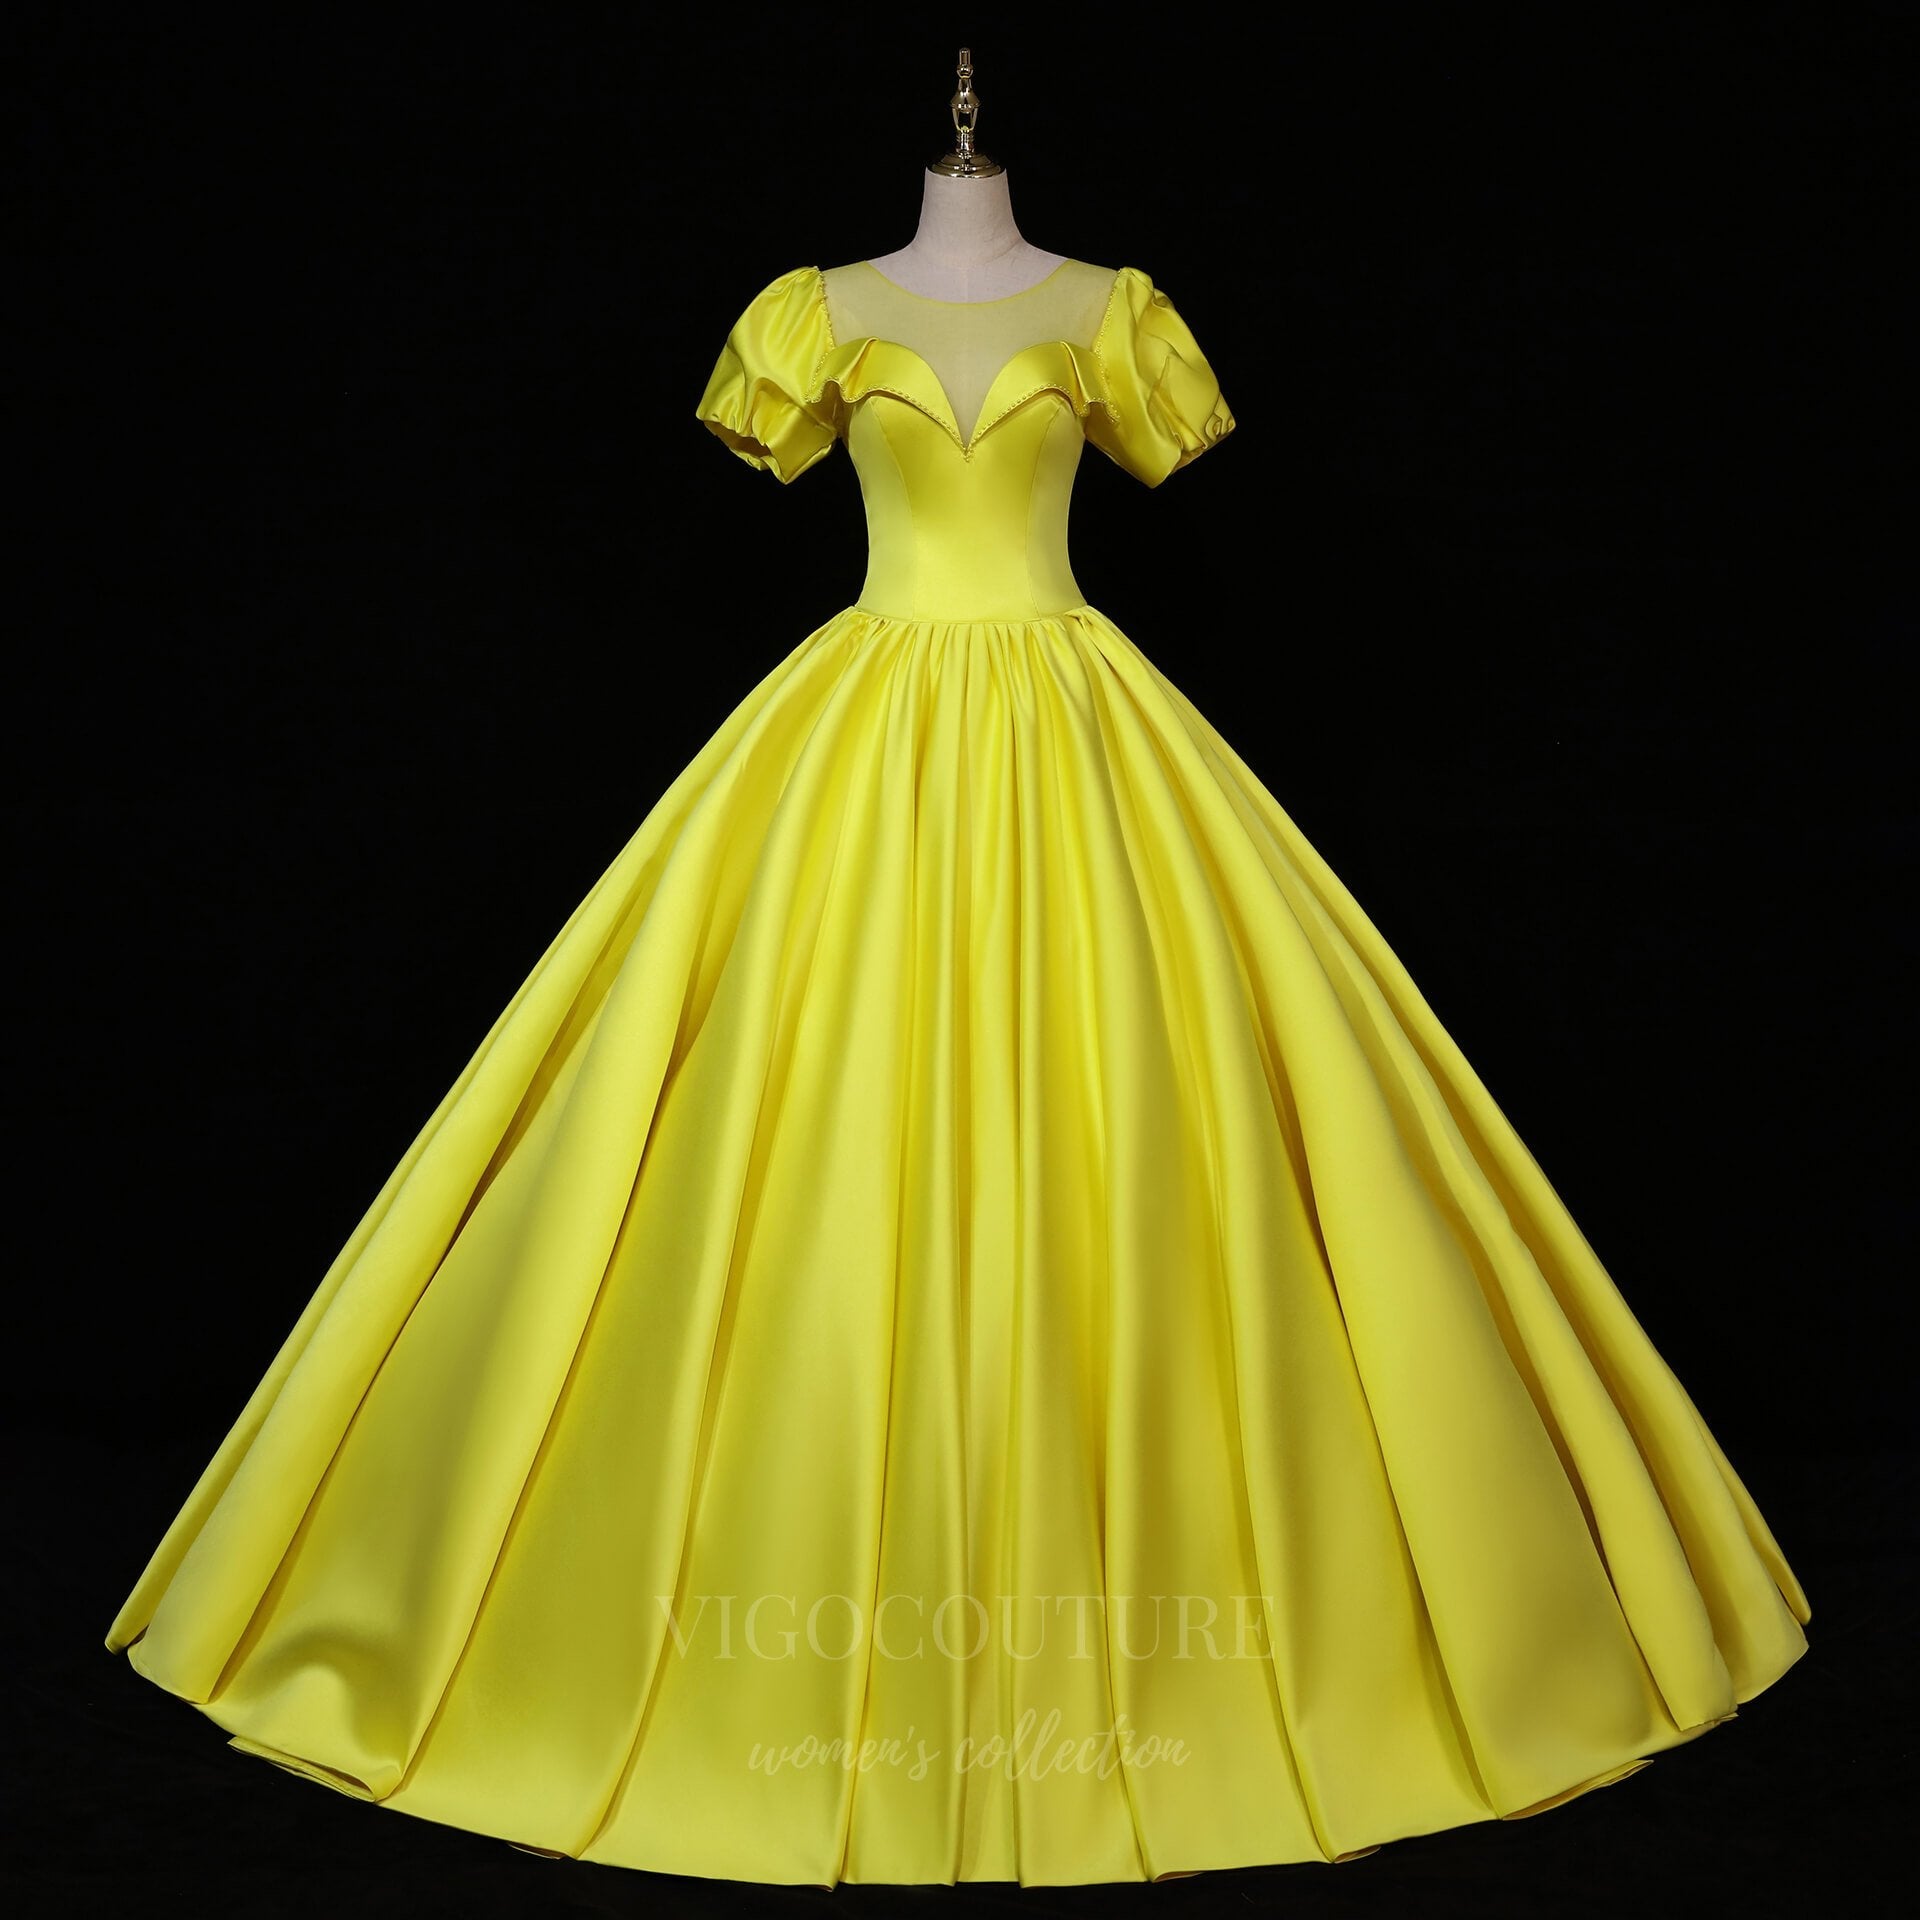 vigocouture-Puffed Sleeve Round Neck Prom Dress 20686-Prom Dresses-vigocouture-